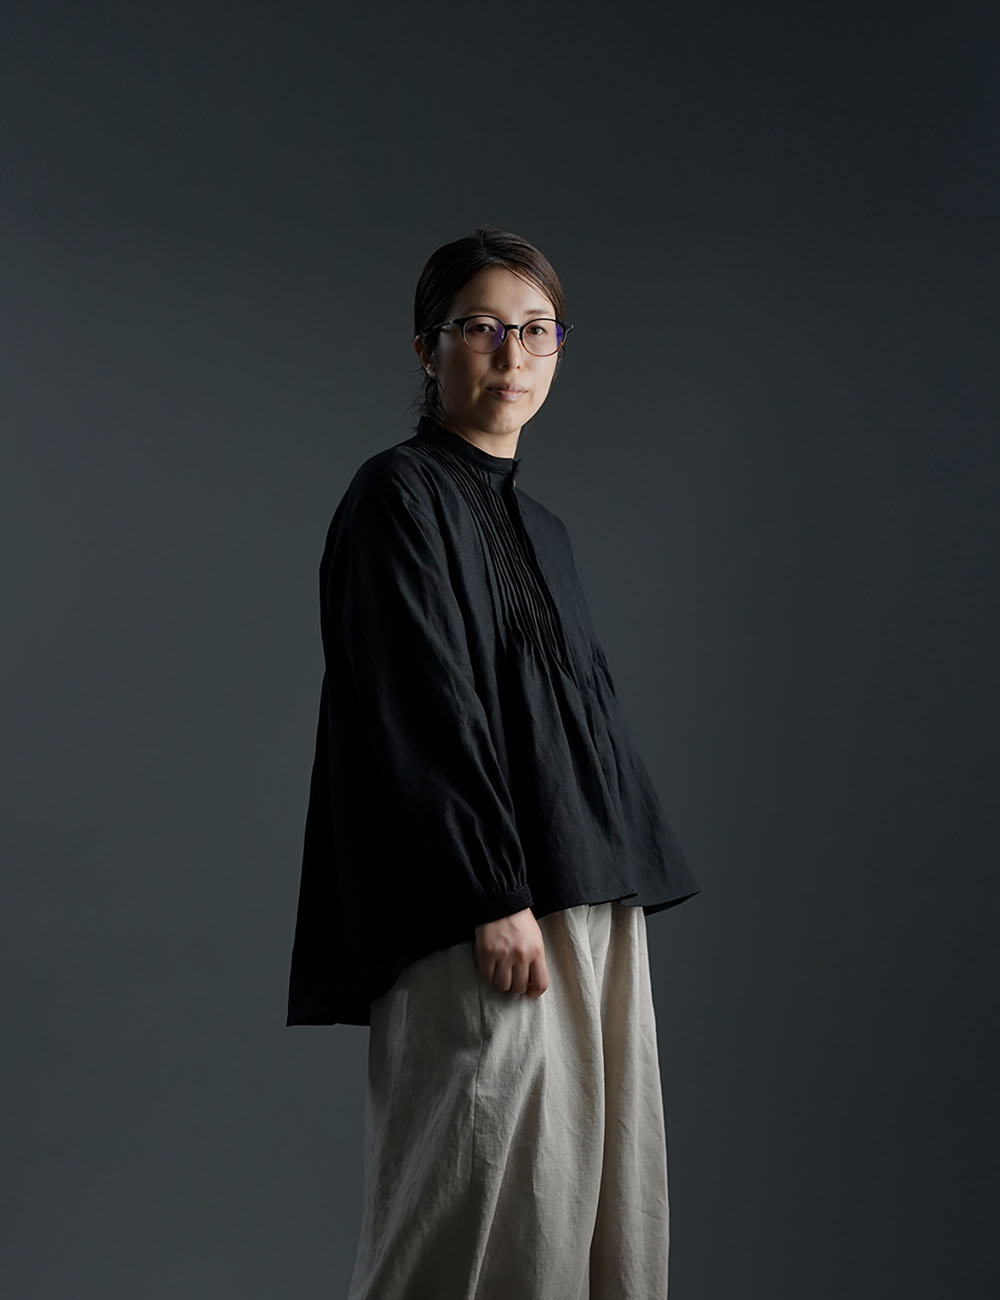 【wafu】Rosanna（ロザンナ）　Pintucked linen shirt /2色展開 t006d